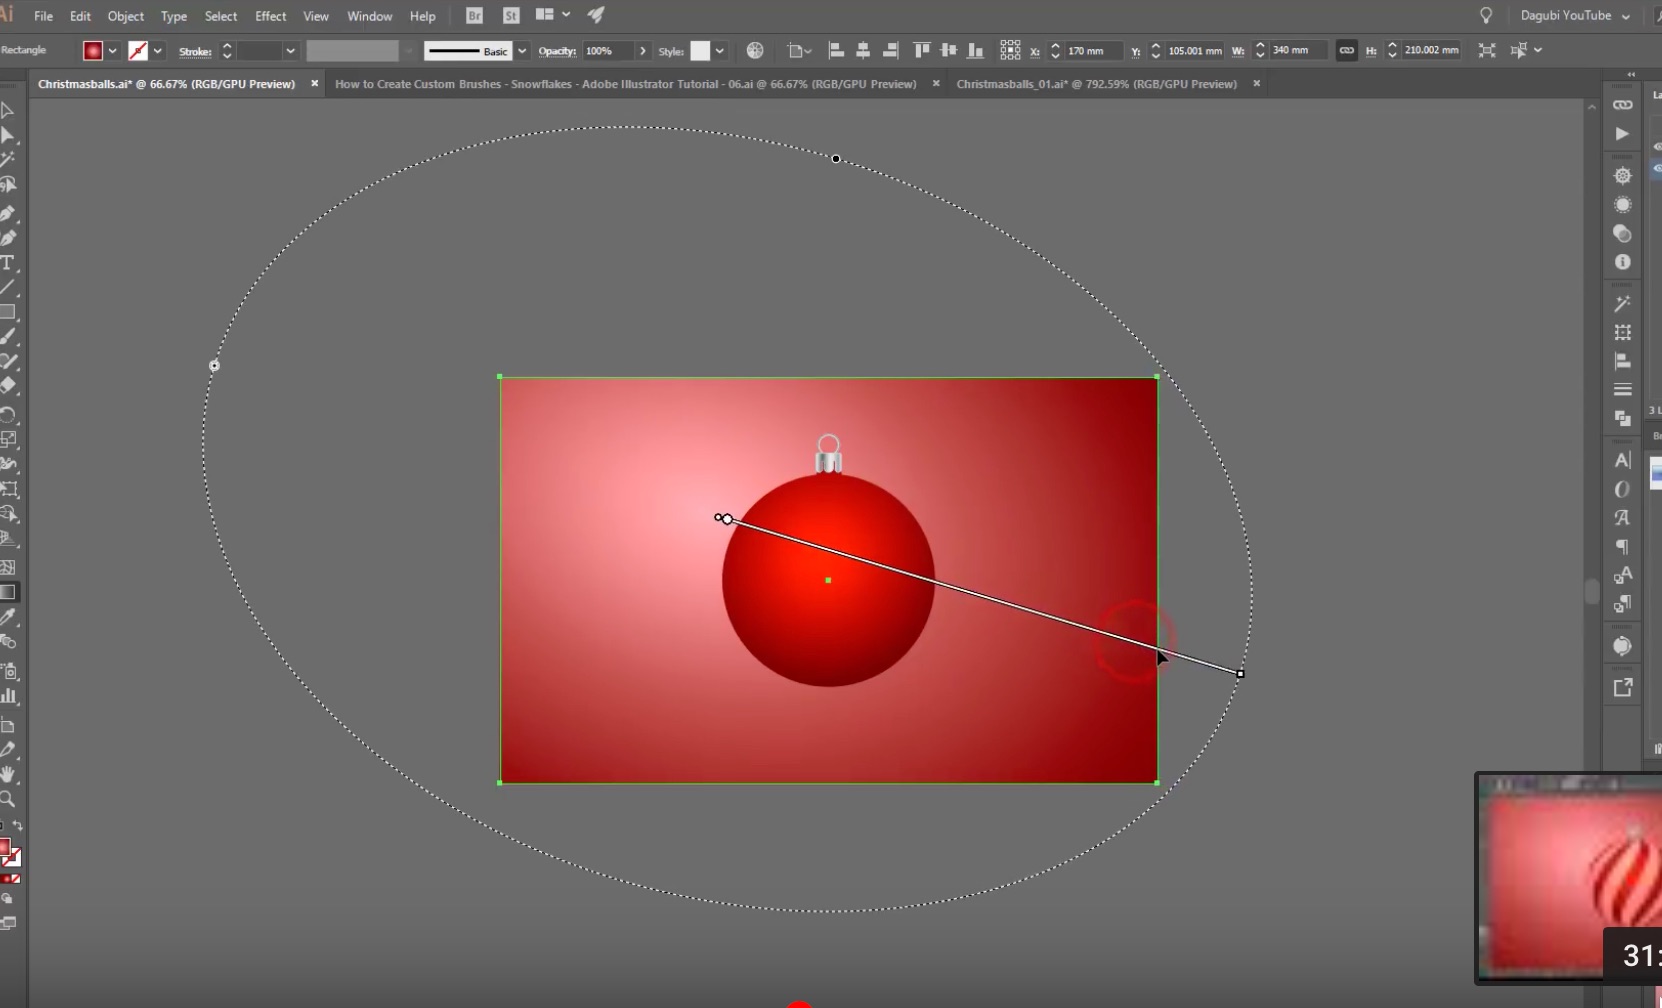 Cursor_and__6__How_to_Design_Decorative_Christmas_Balls_-_Adobe_Illustrator_Tutorial_-_YouTube.jpg